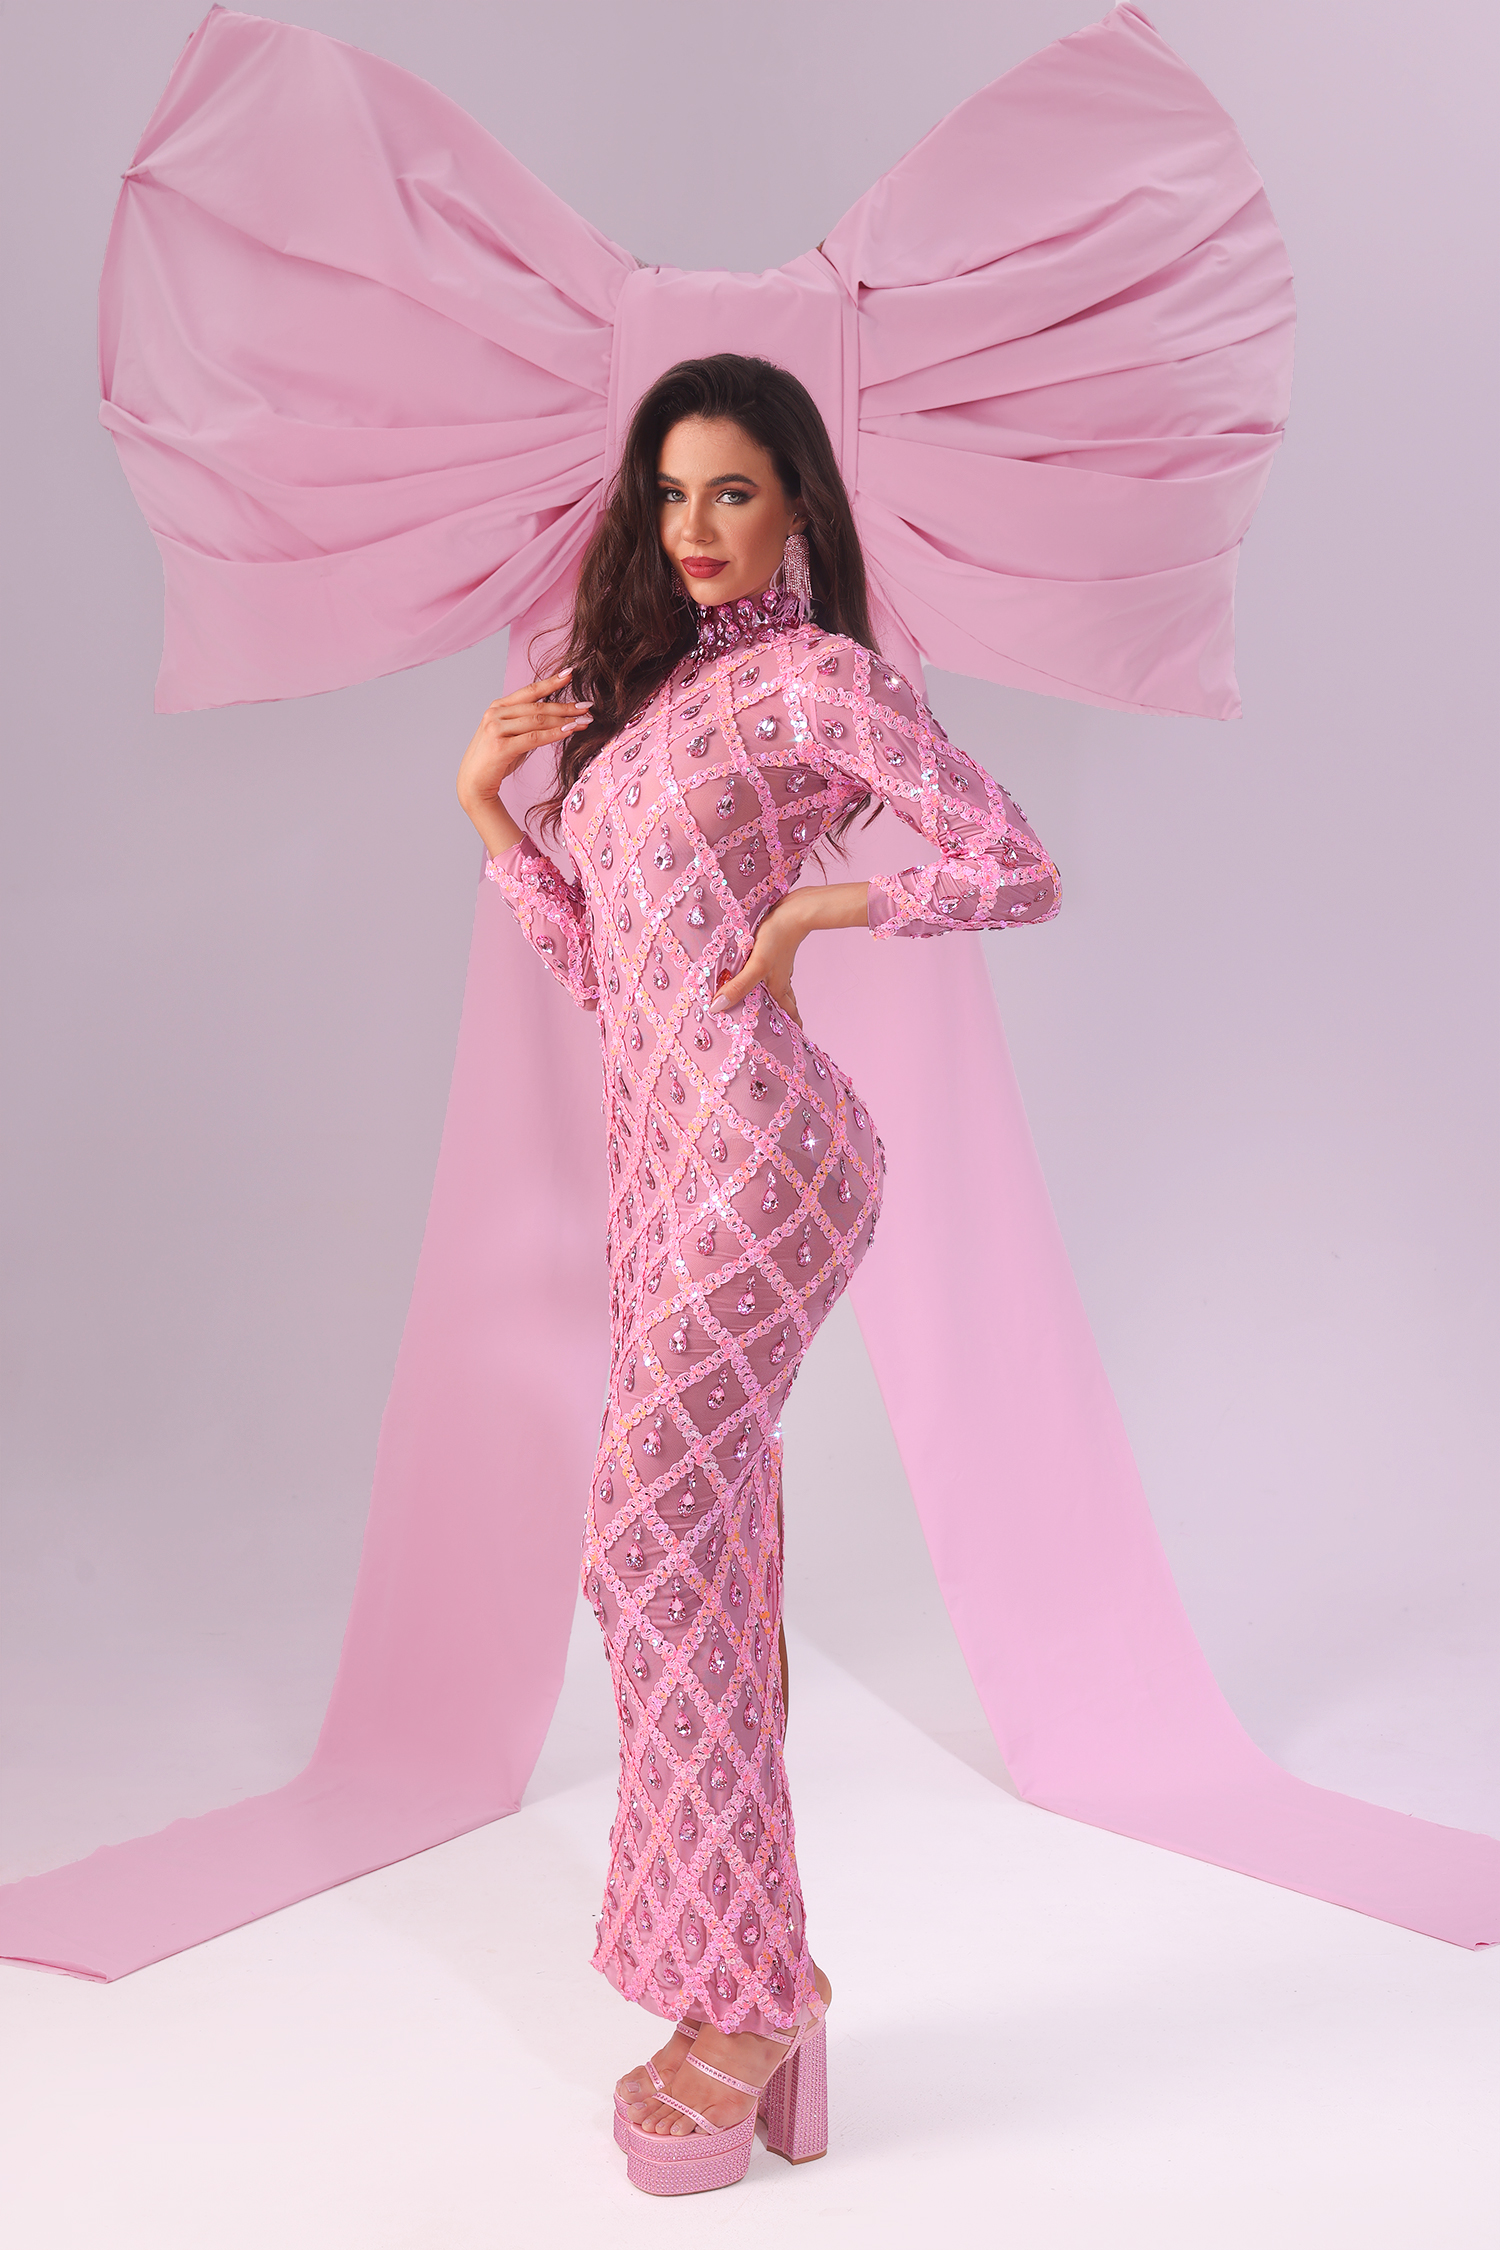 Dido Sexy Lingerie Bowknot Lace Design Bra Panty Set Women Bra Underwear,  Red, XXL 